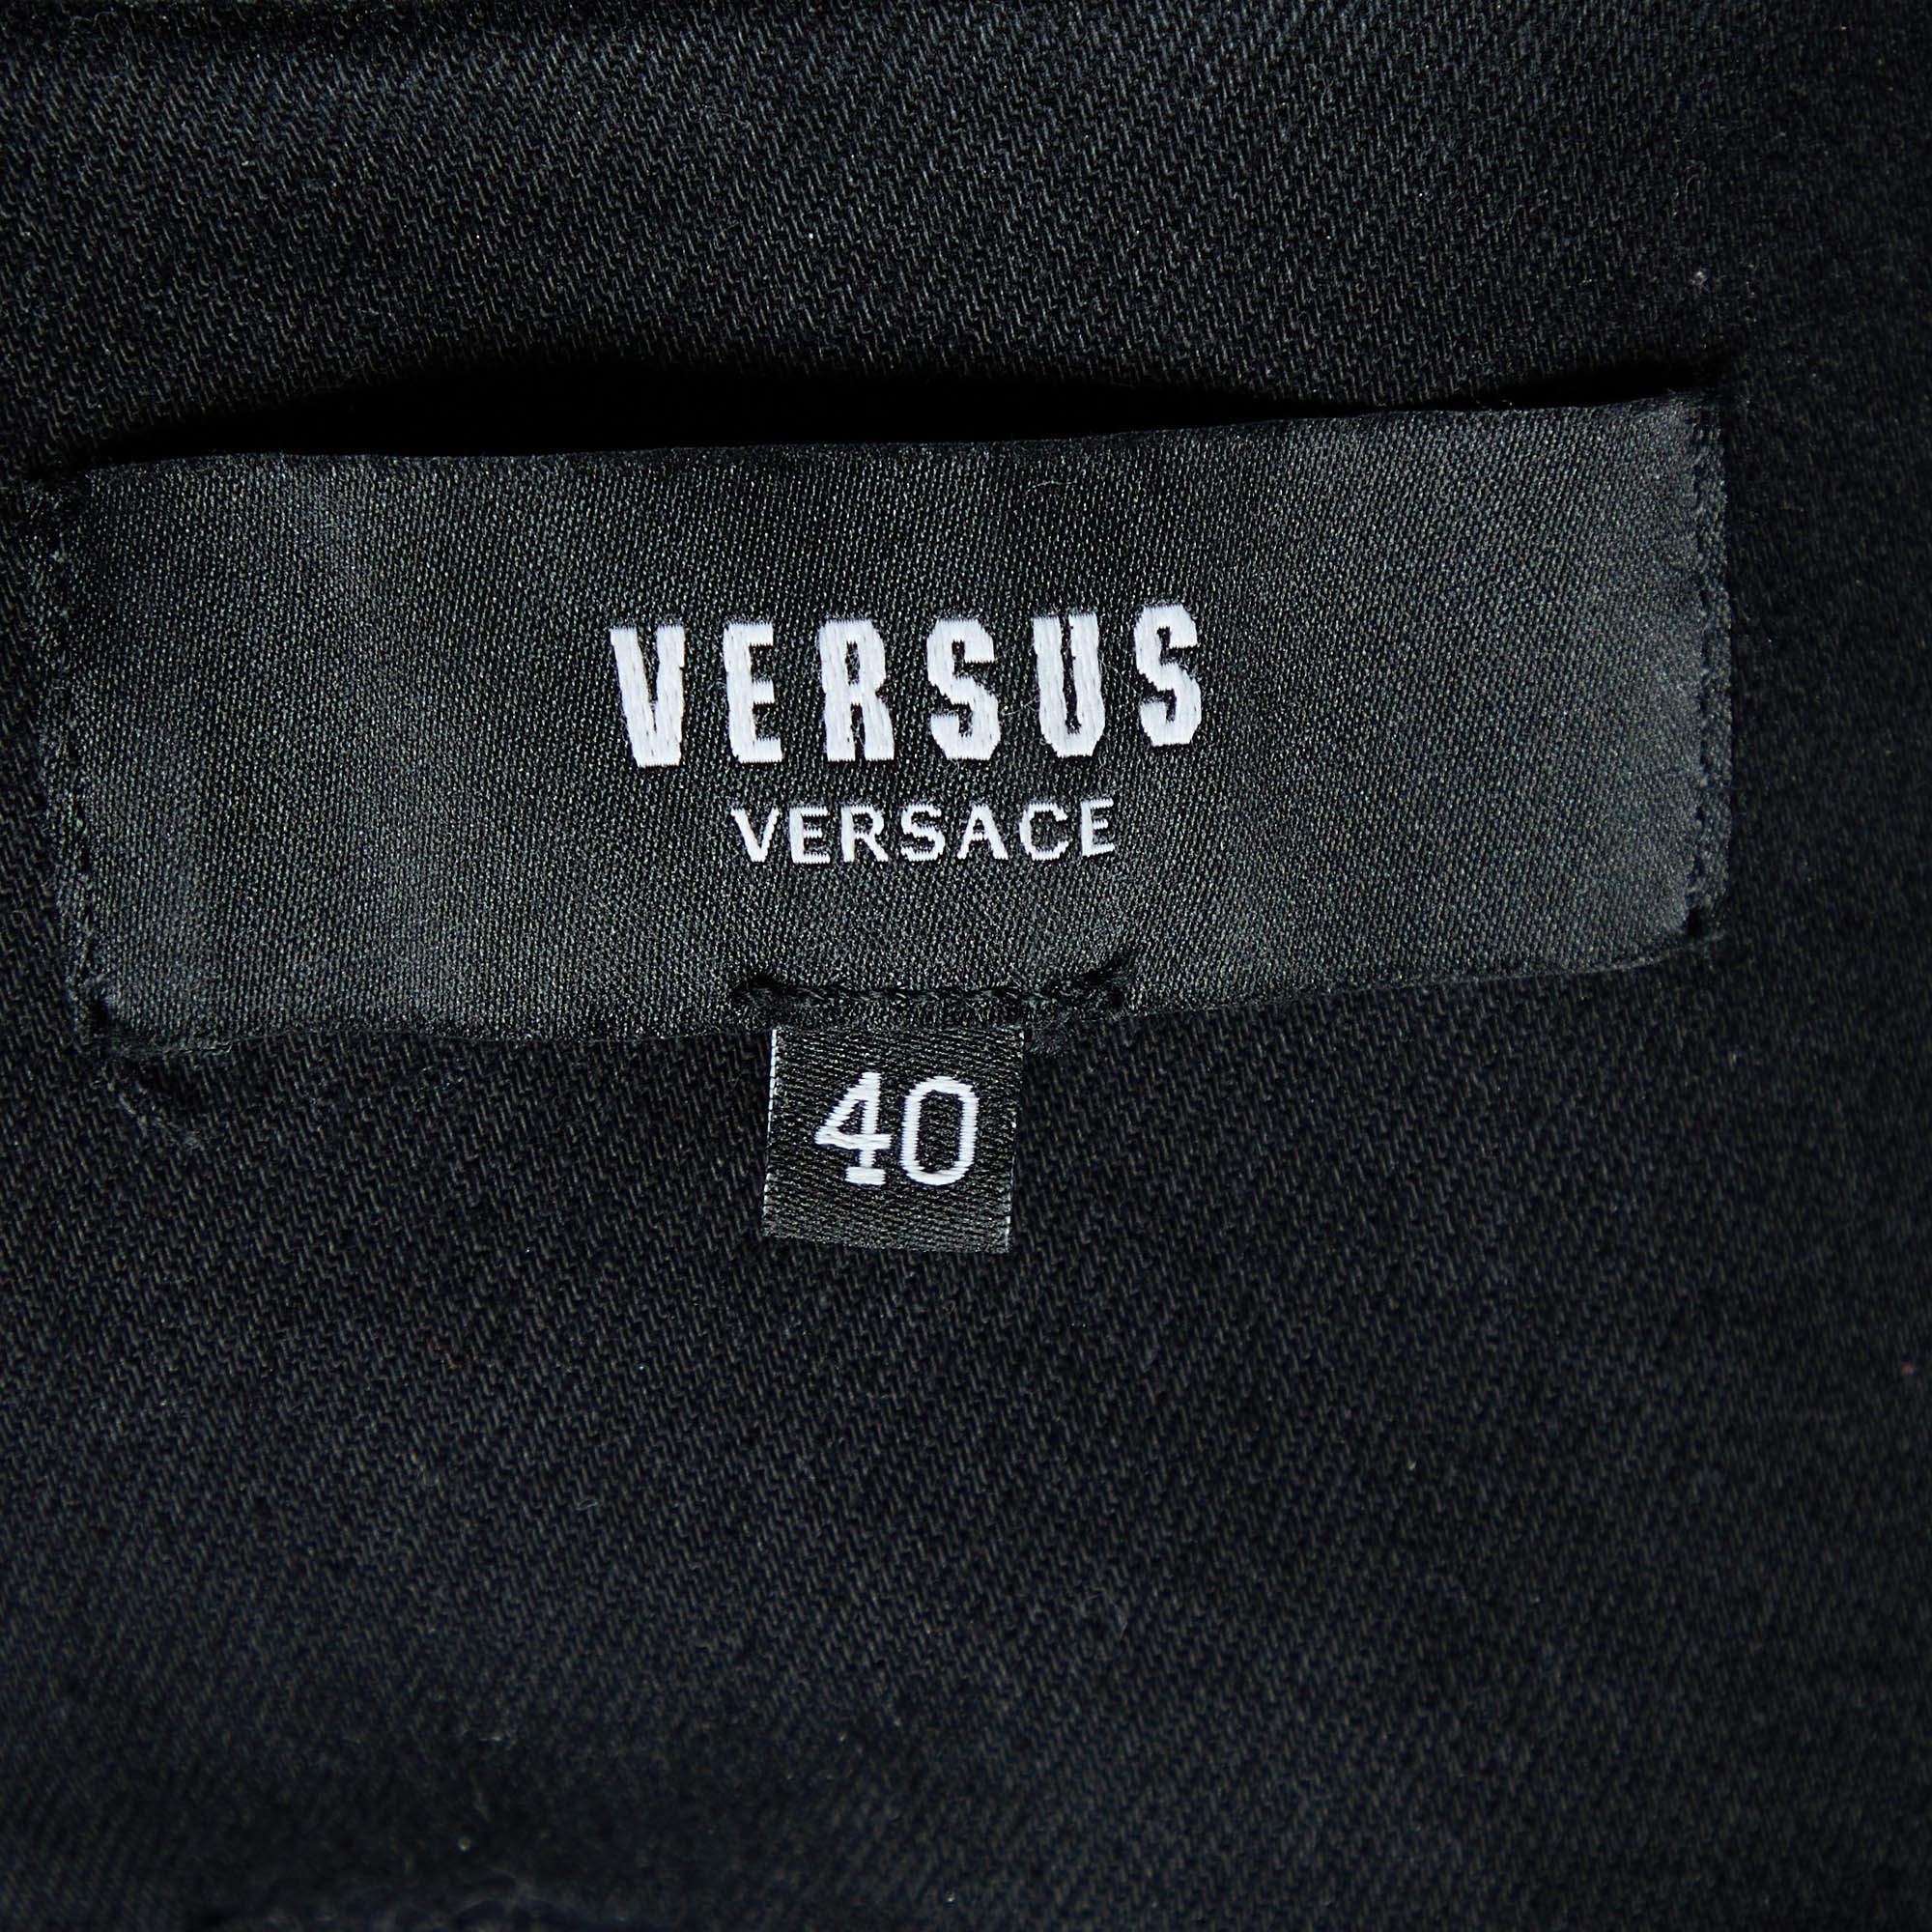 Versus Versace Black Denim Sequined Jacket S In Good Condition For Sale In Dubai, Al Qouz 2